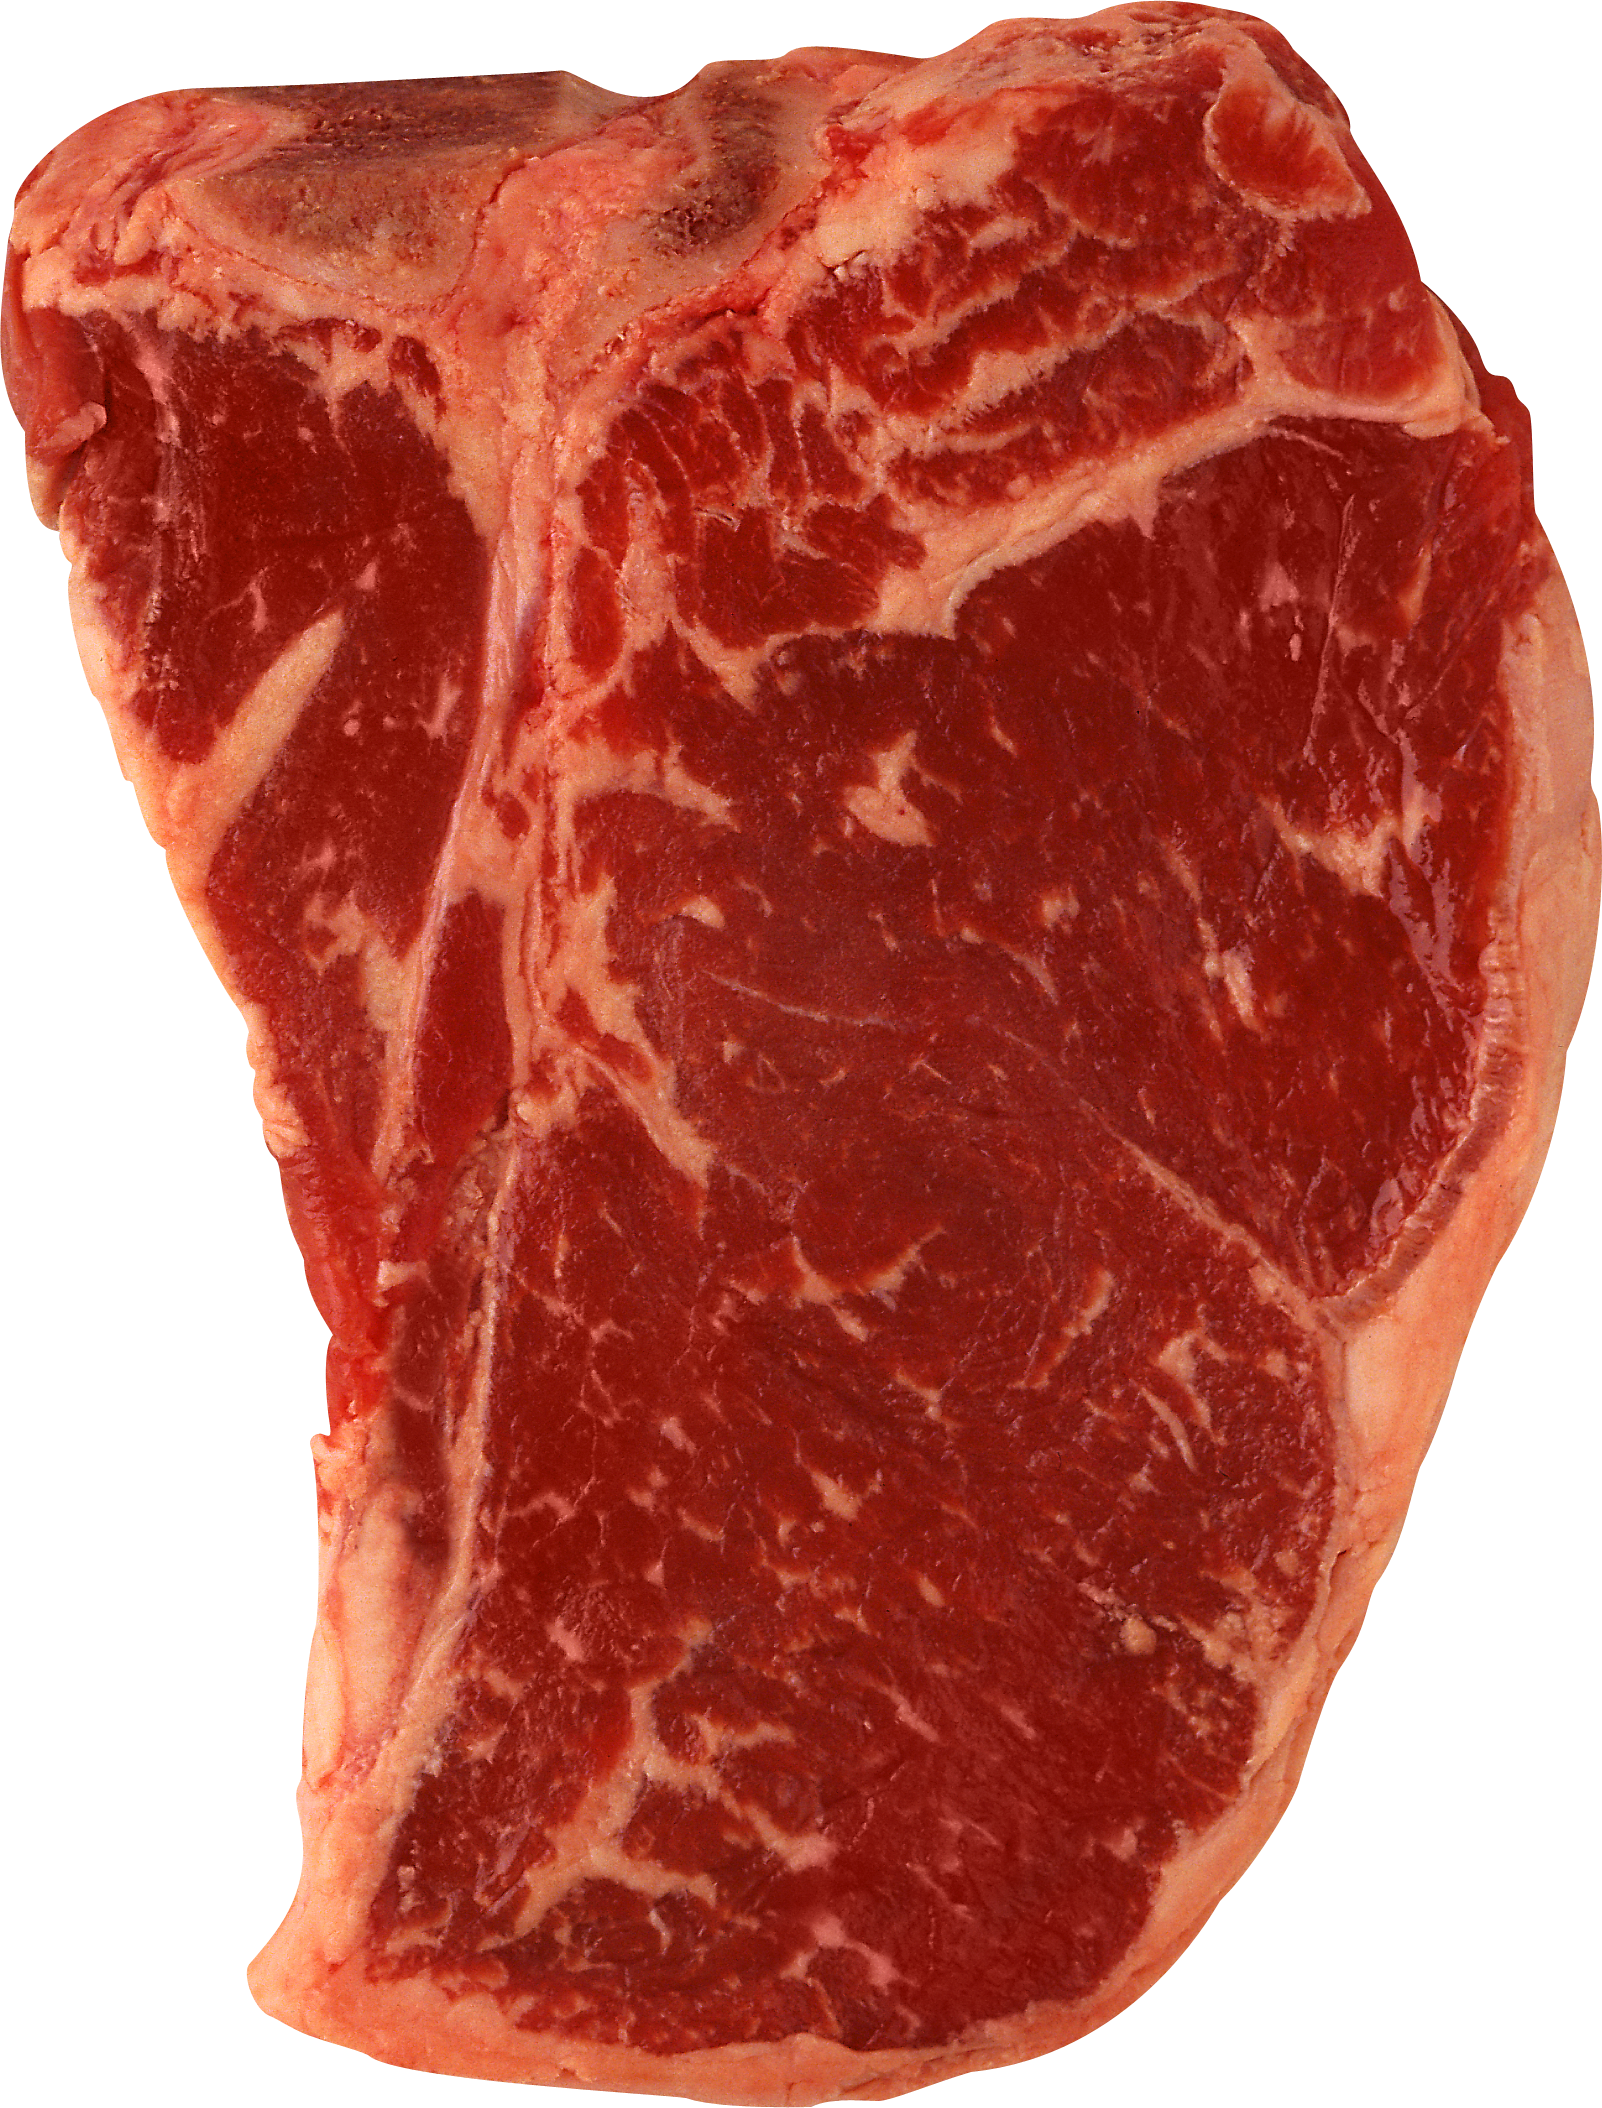 Raw Beef Steak Closeup.png PNG